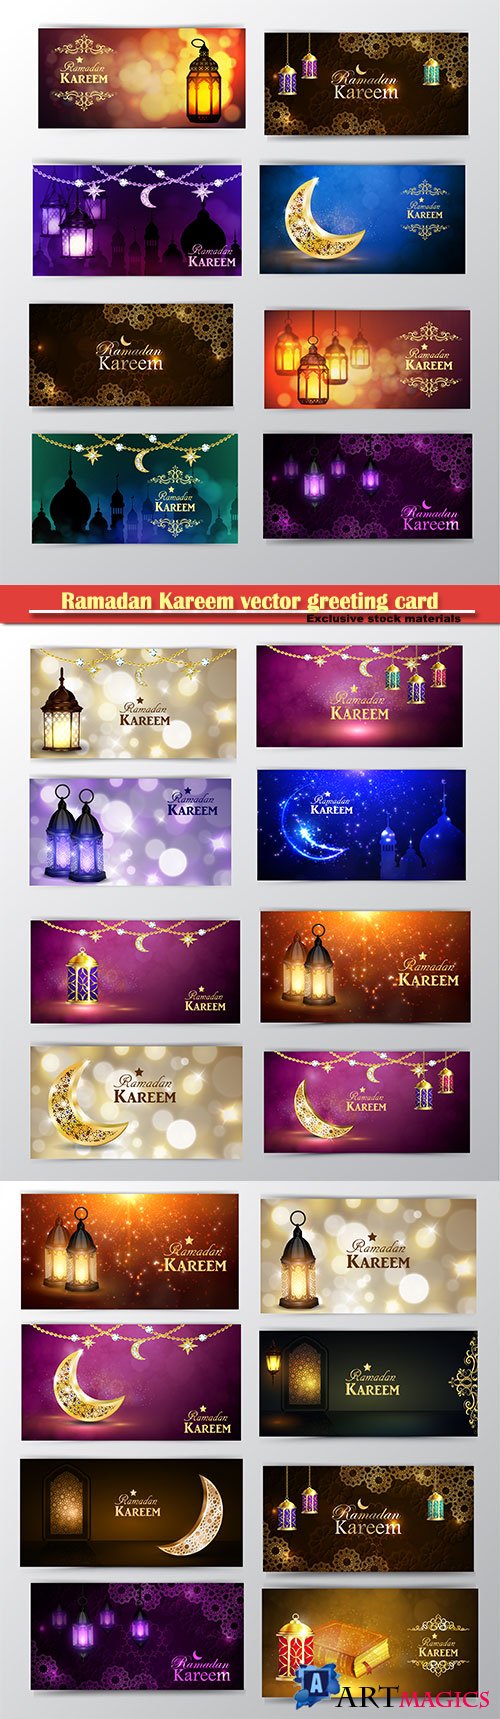 Ramadan Kareem vector greeting background, banner set